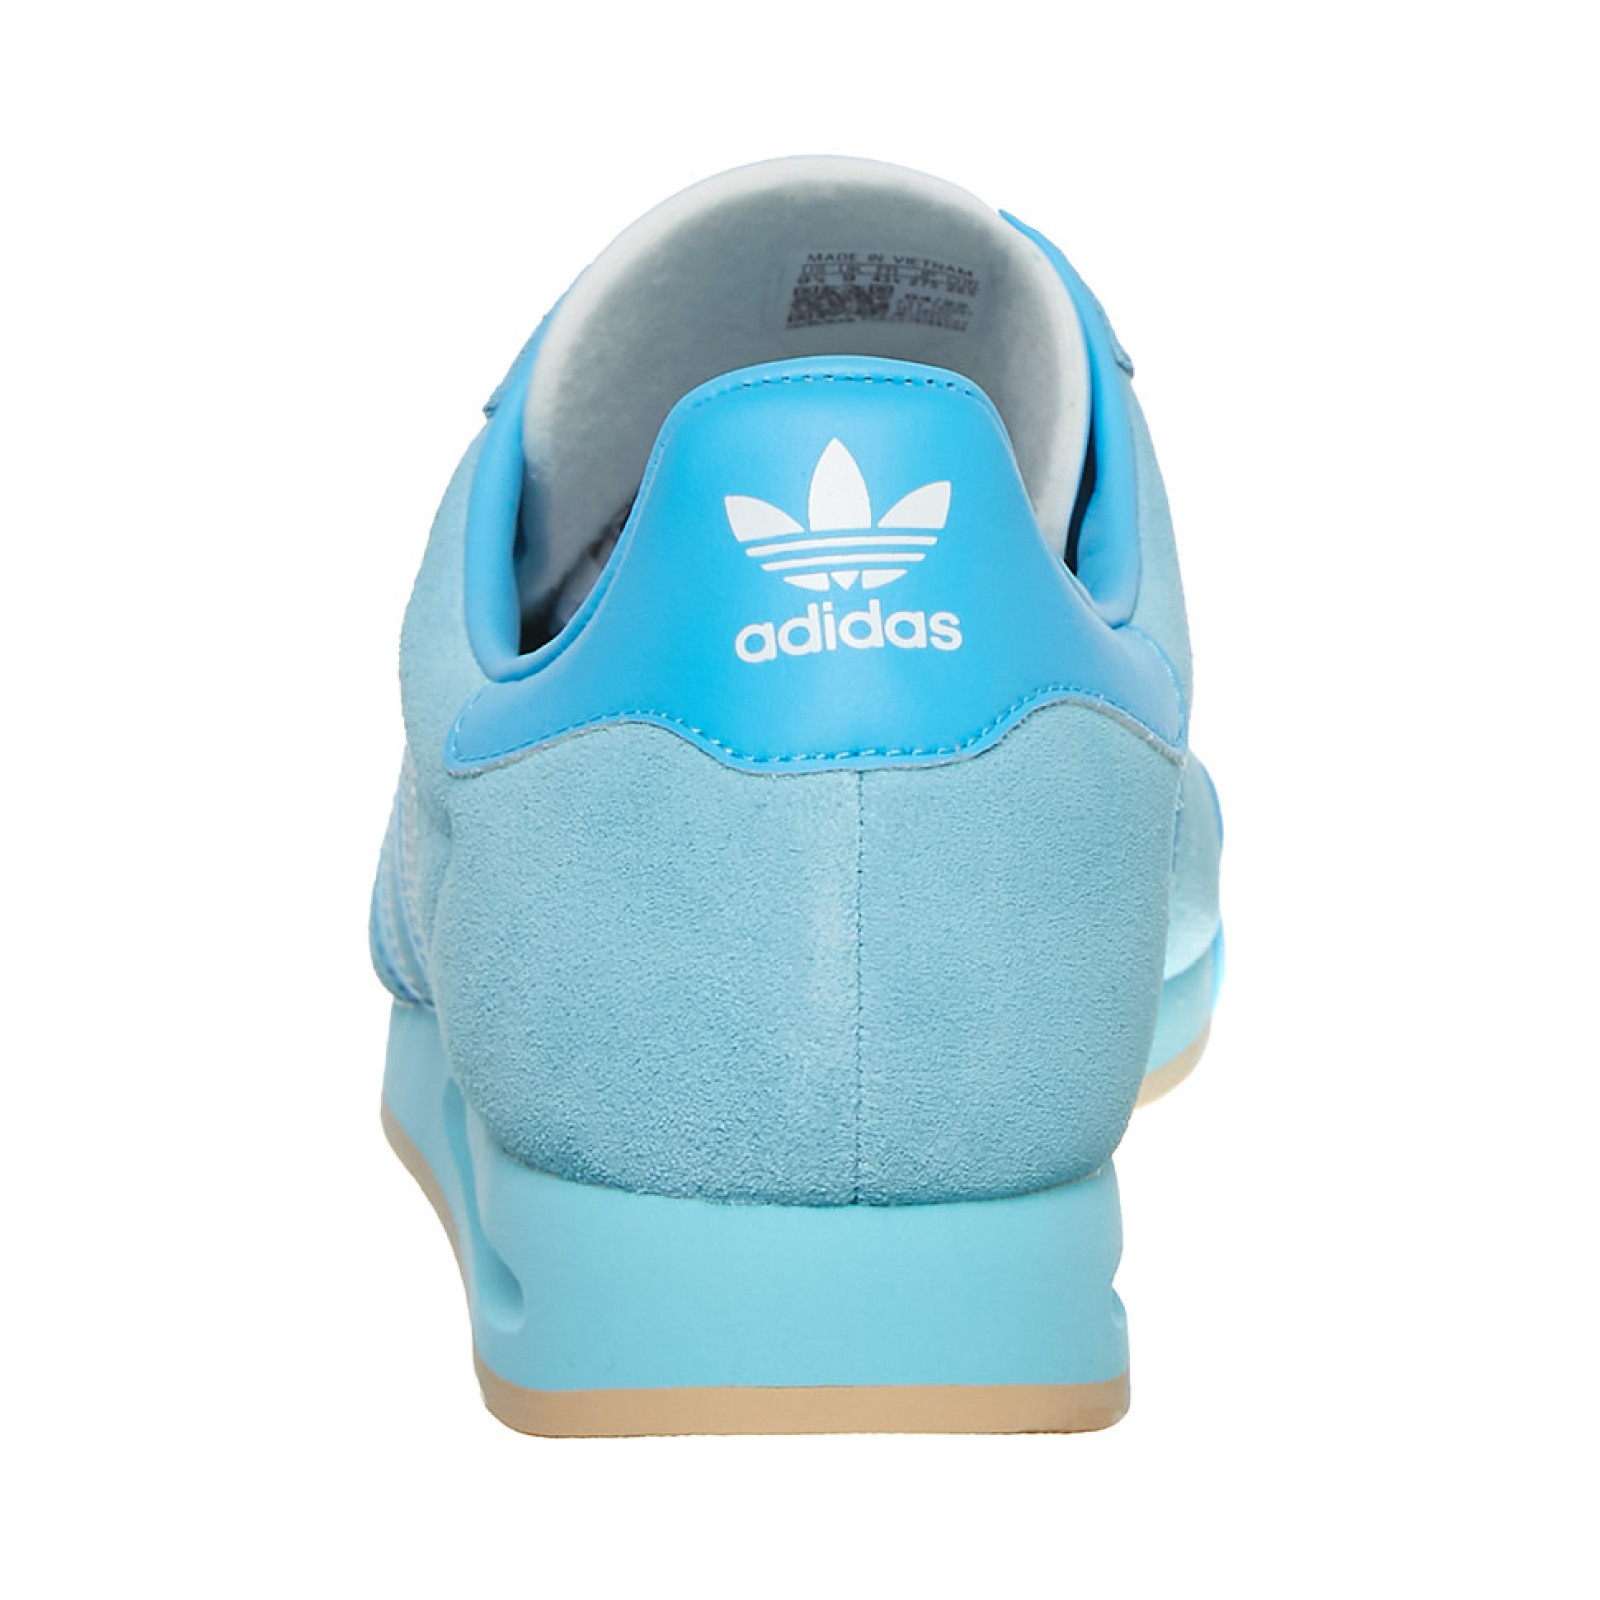 Adidas AS 520
« Bliss Blue »